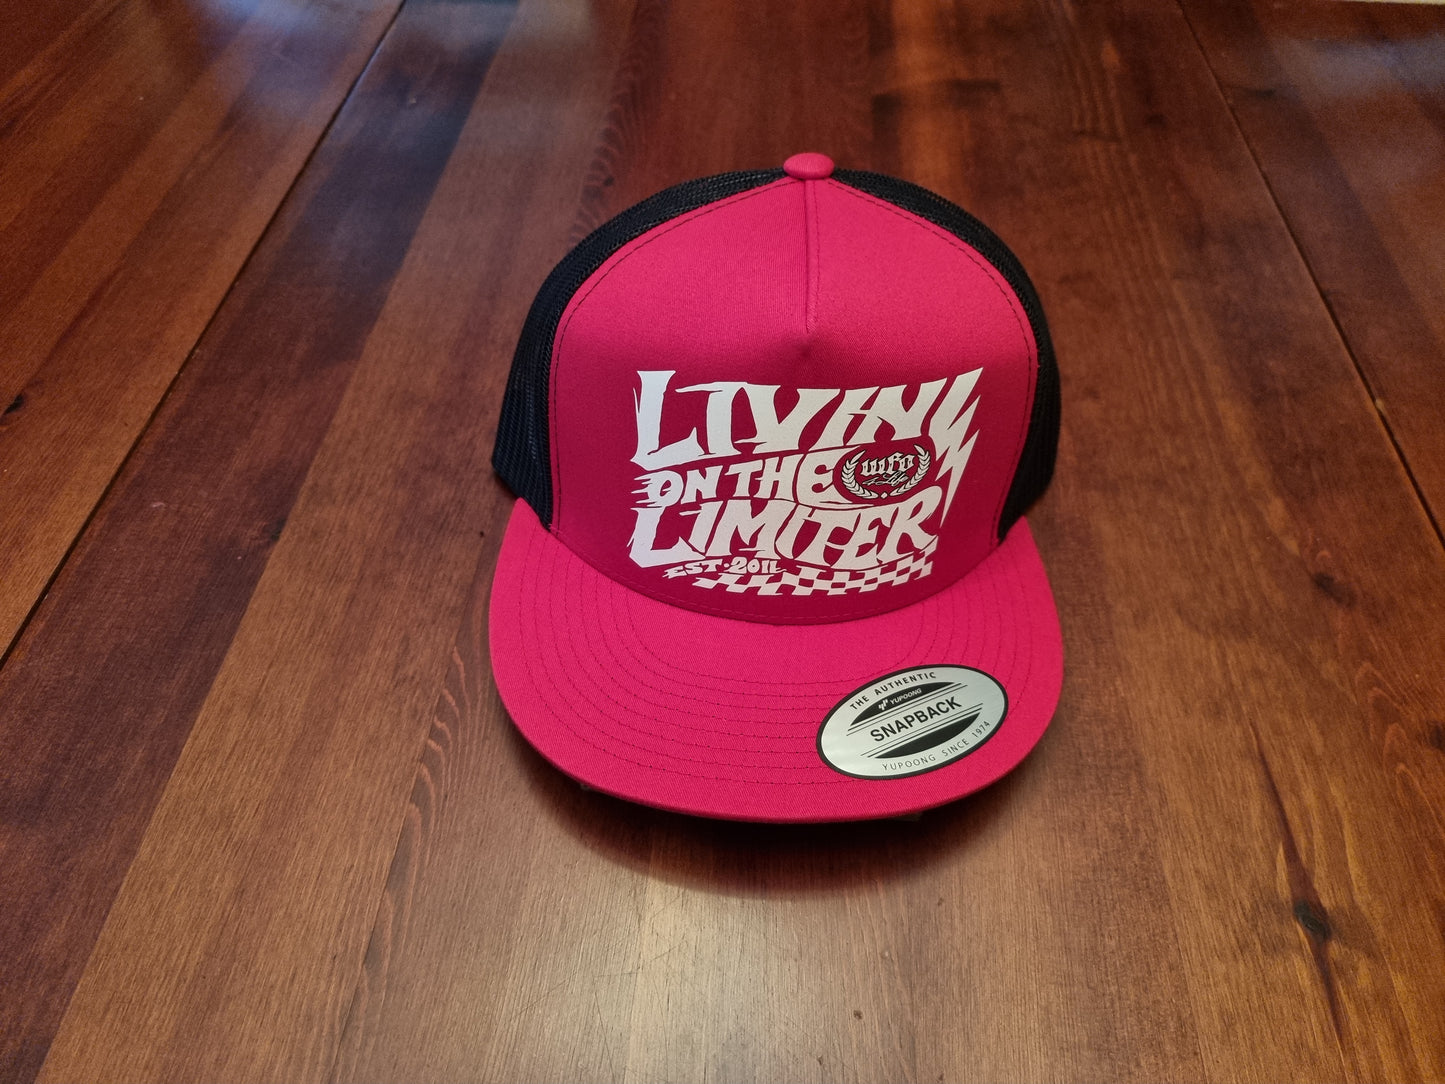 WFO 4 LIFE ™ - "Livin On The Limiter" Mesh Snapback Hat - Flat Bill - 6 Color Options